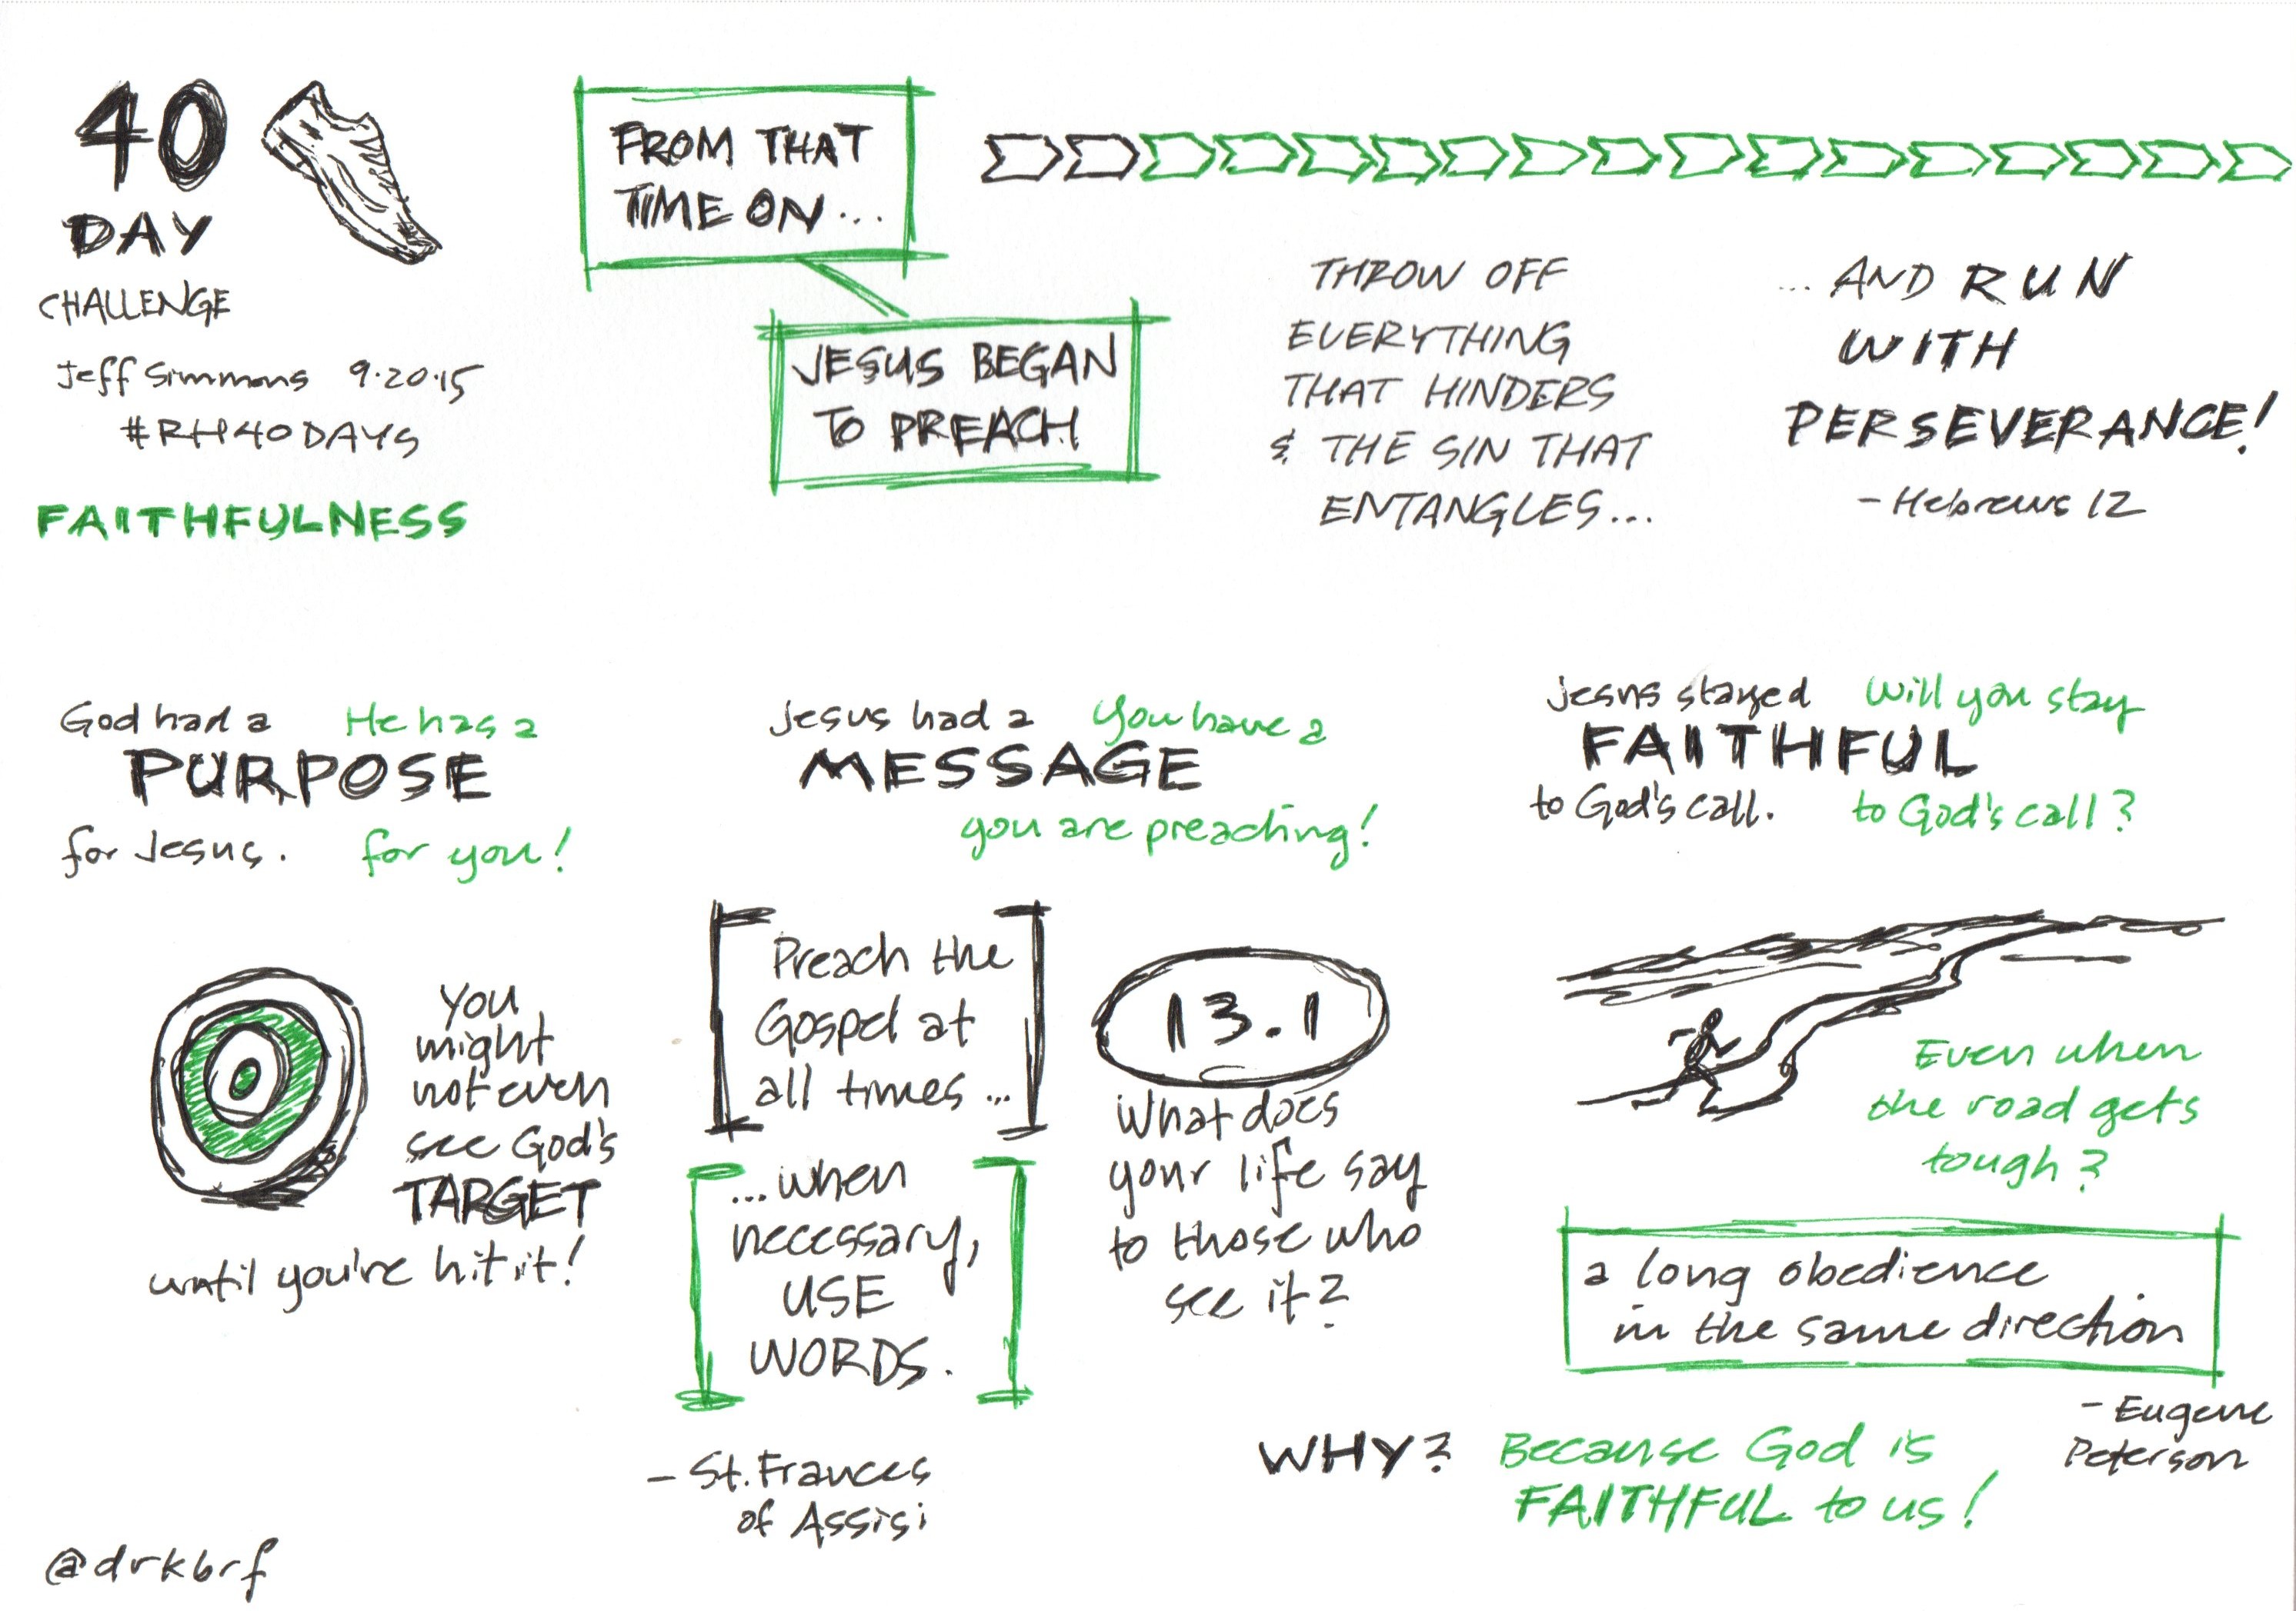 15-09-20 RHCC 40 Day Challenge - Faithfulness